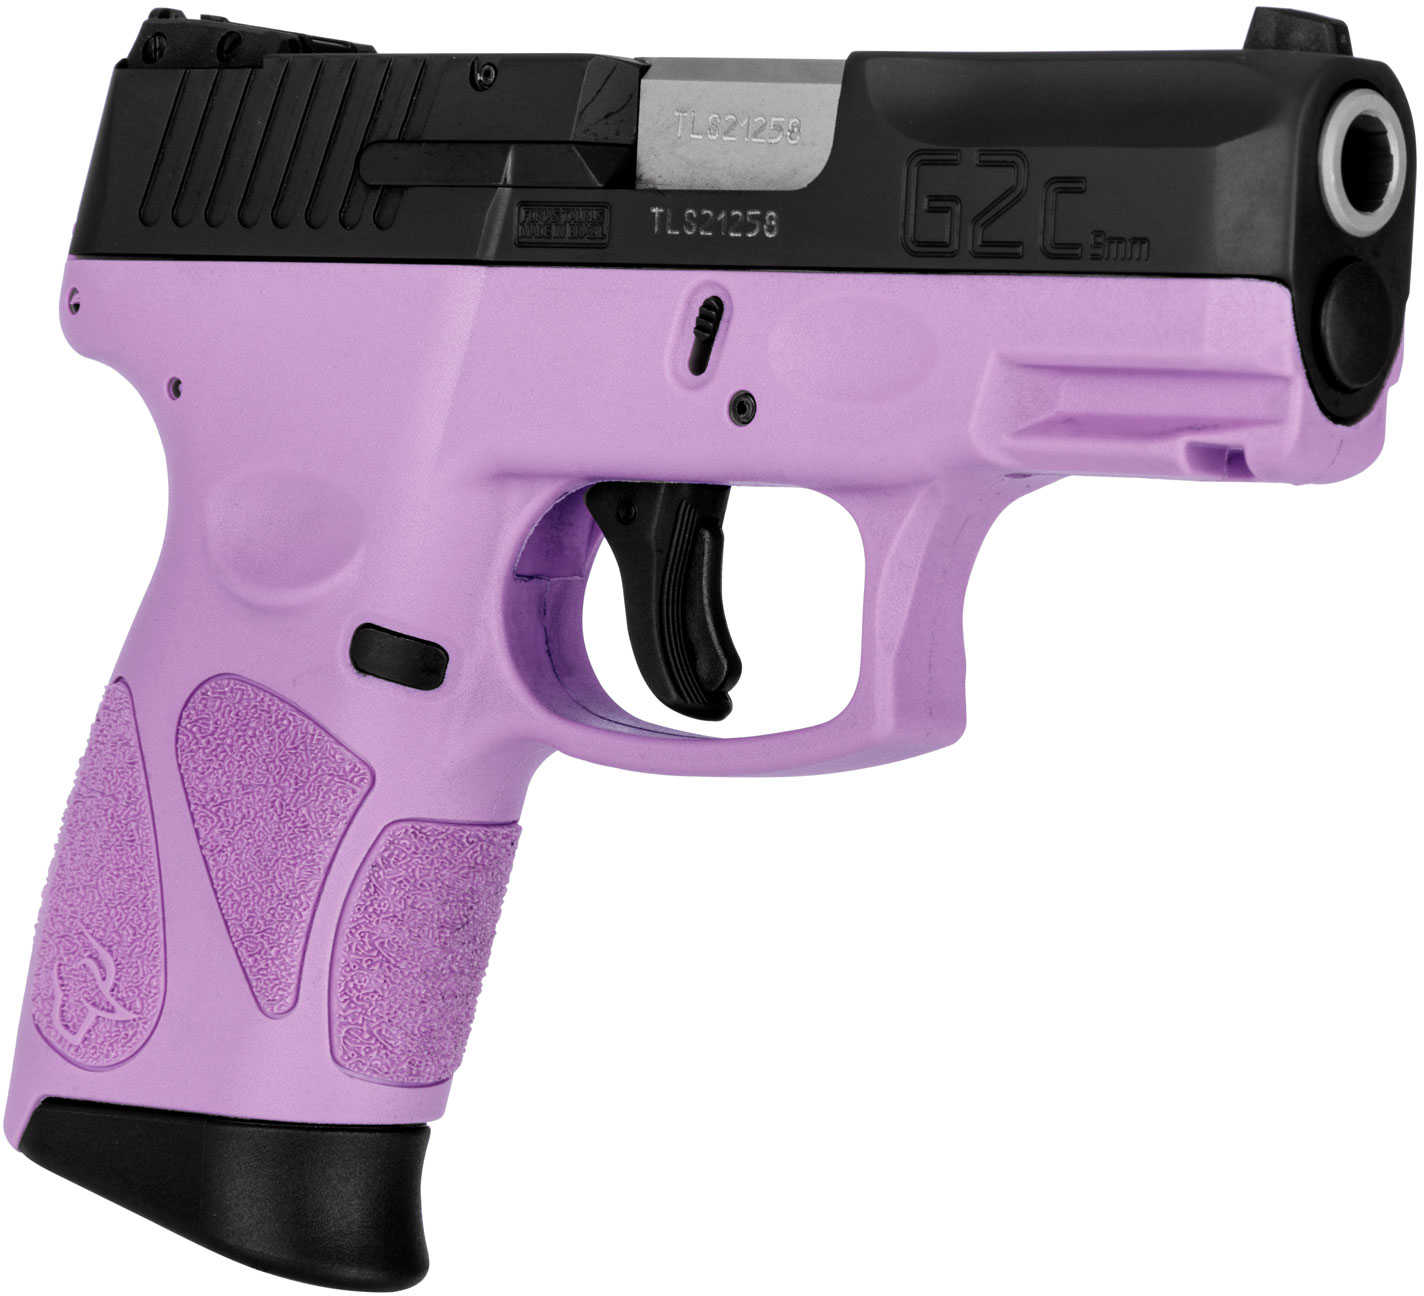 Taurus G2C Pistol 9mm 3.25" Barrel 12 Round Capacity Black Carbon Steel Slide Light Purple Polymer Grip